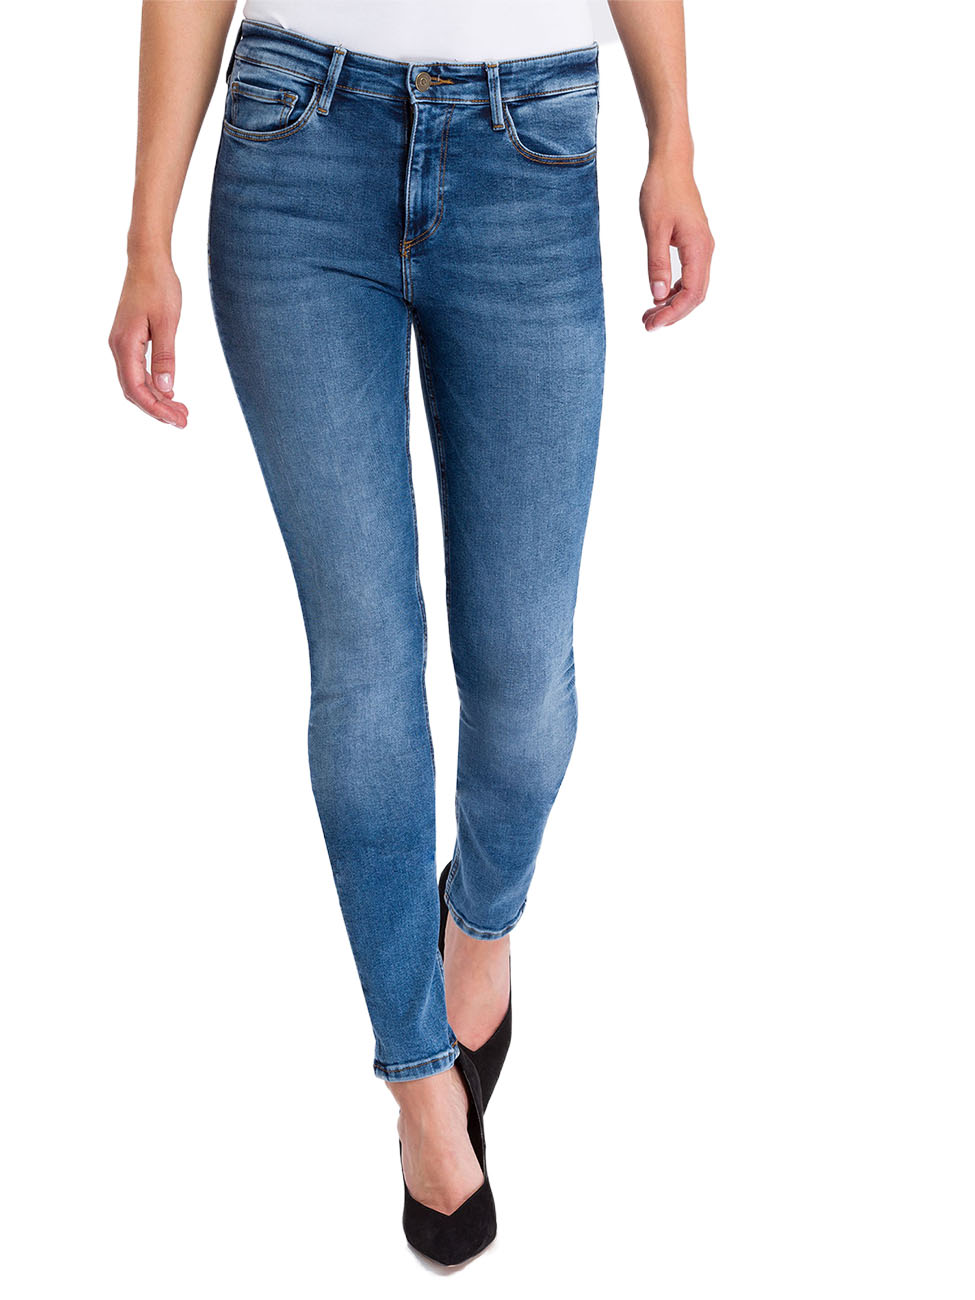 Cross Jeans Damen Jeans Natalia Super Skinny Fit Blau Mid Blue Kaufen Jeans Direct De